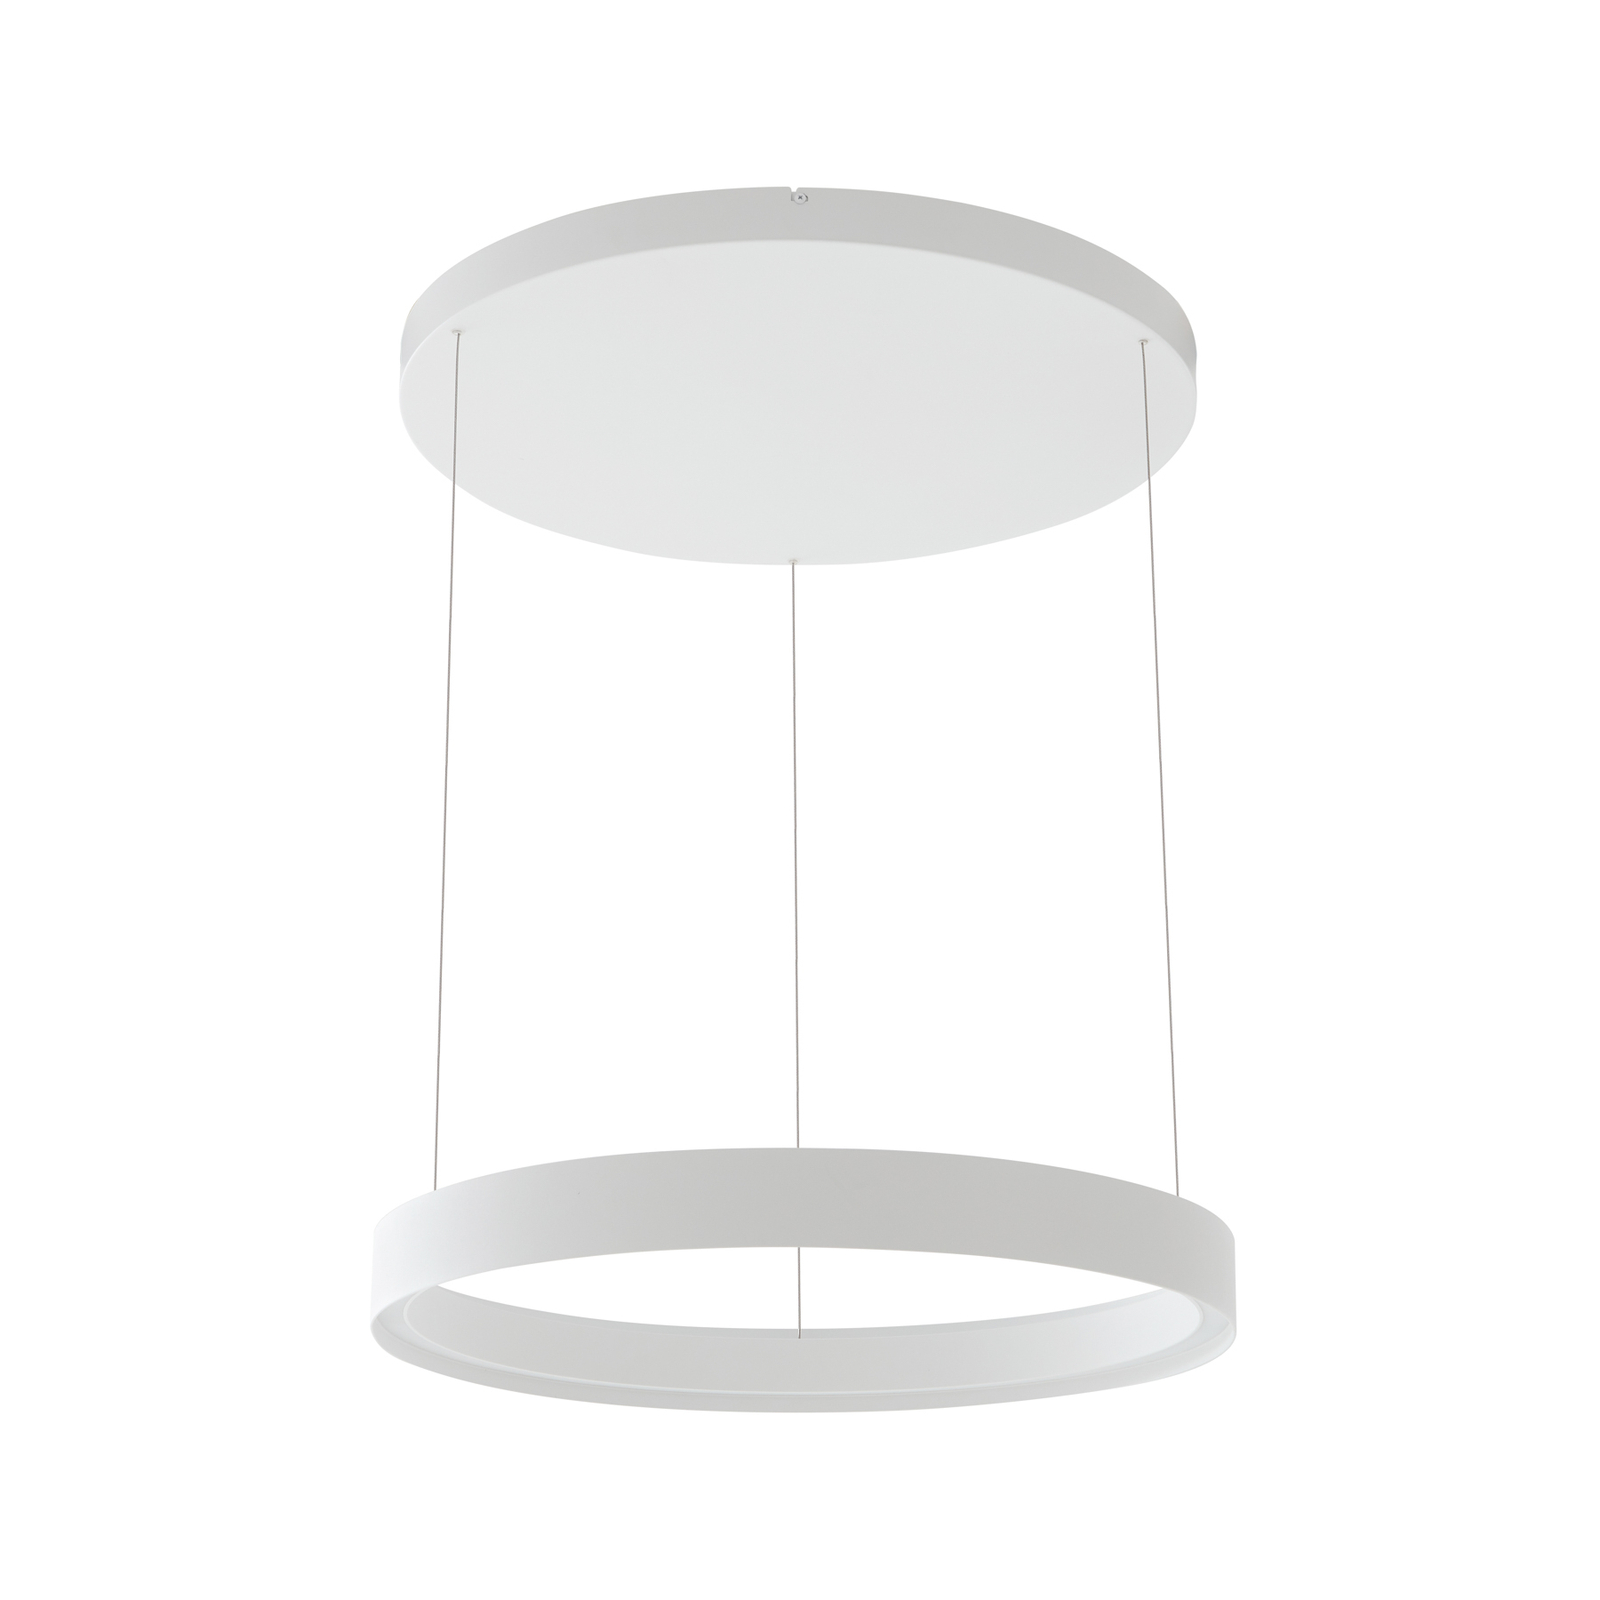 Lucande LED pendant light Philine, 60 cm, white, iron